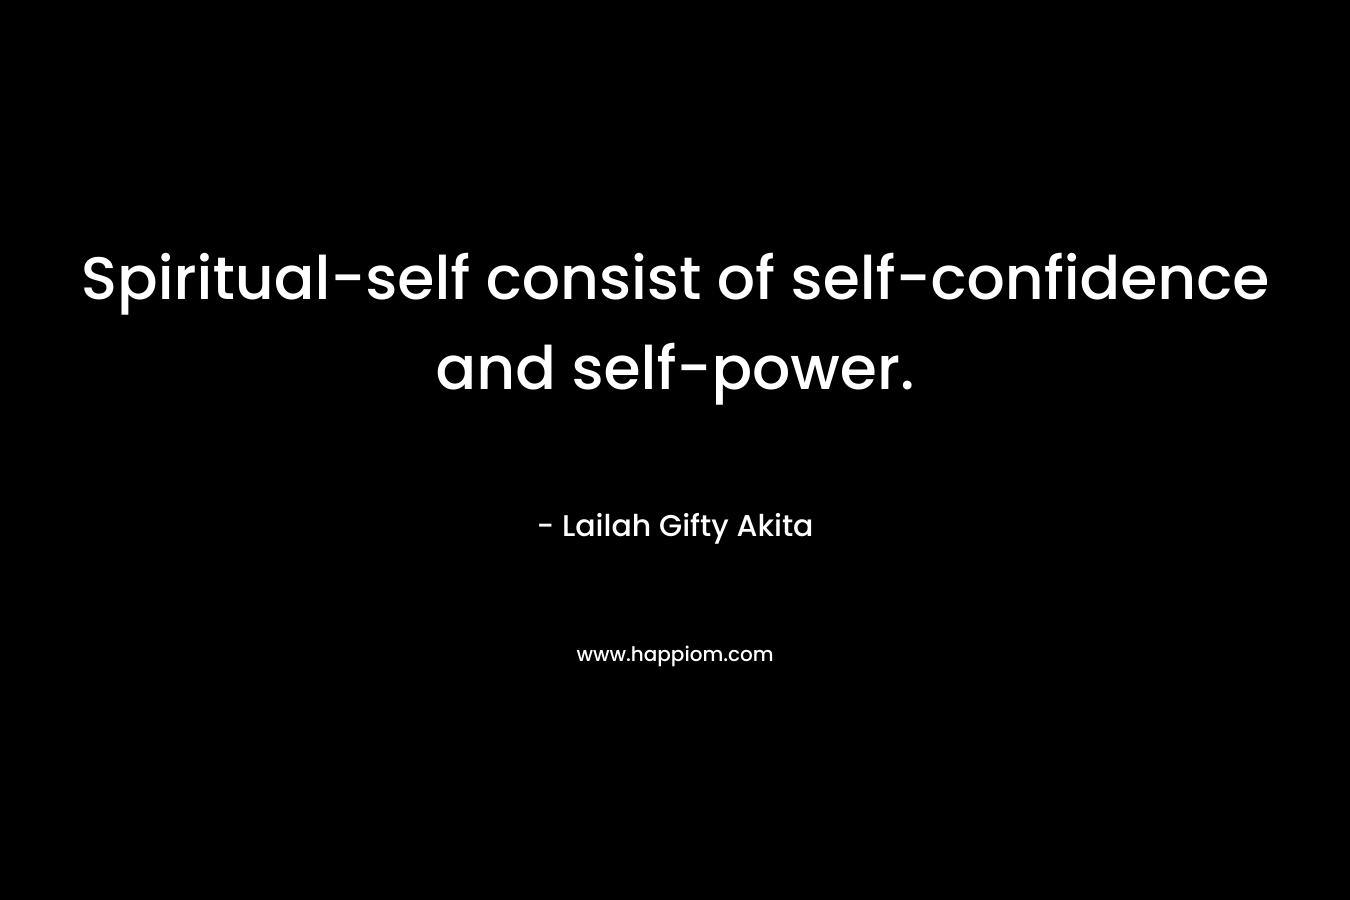 Spiritual-self consist of self-confidence and self-power.